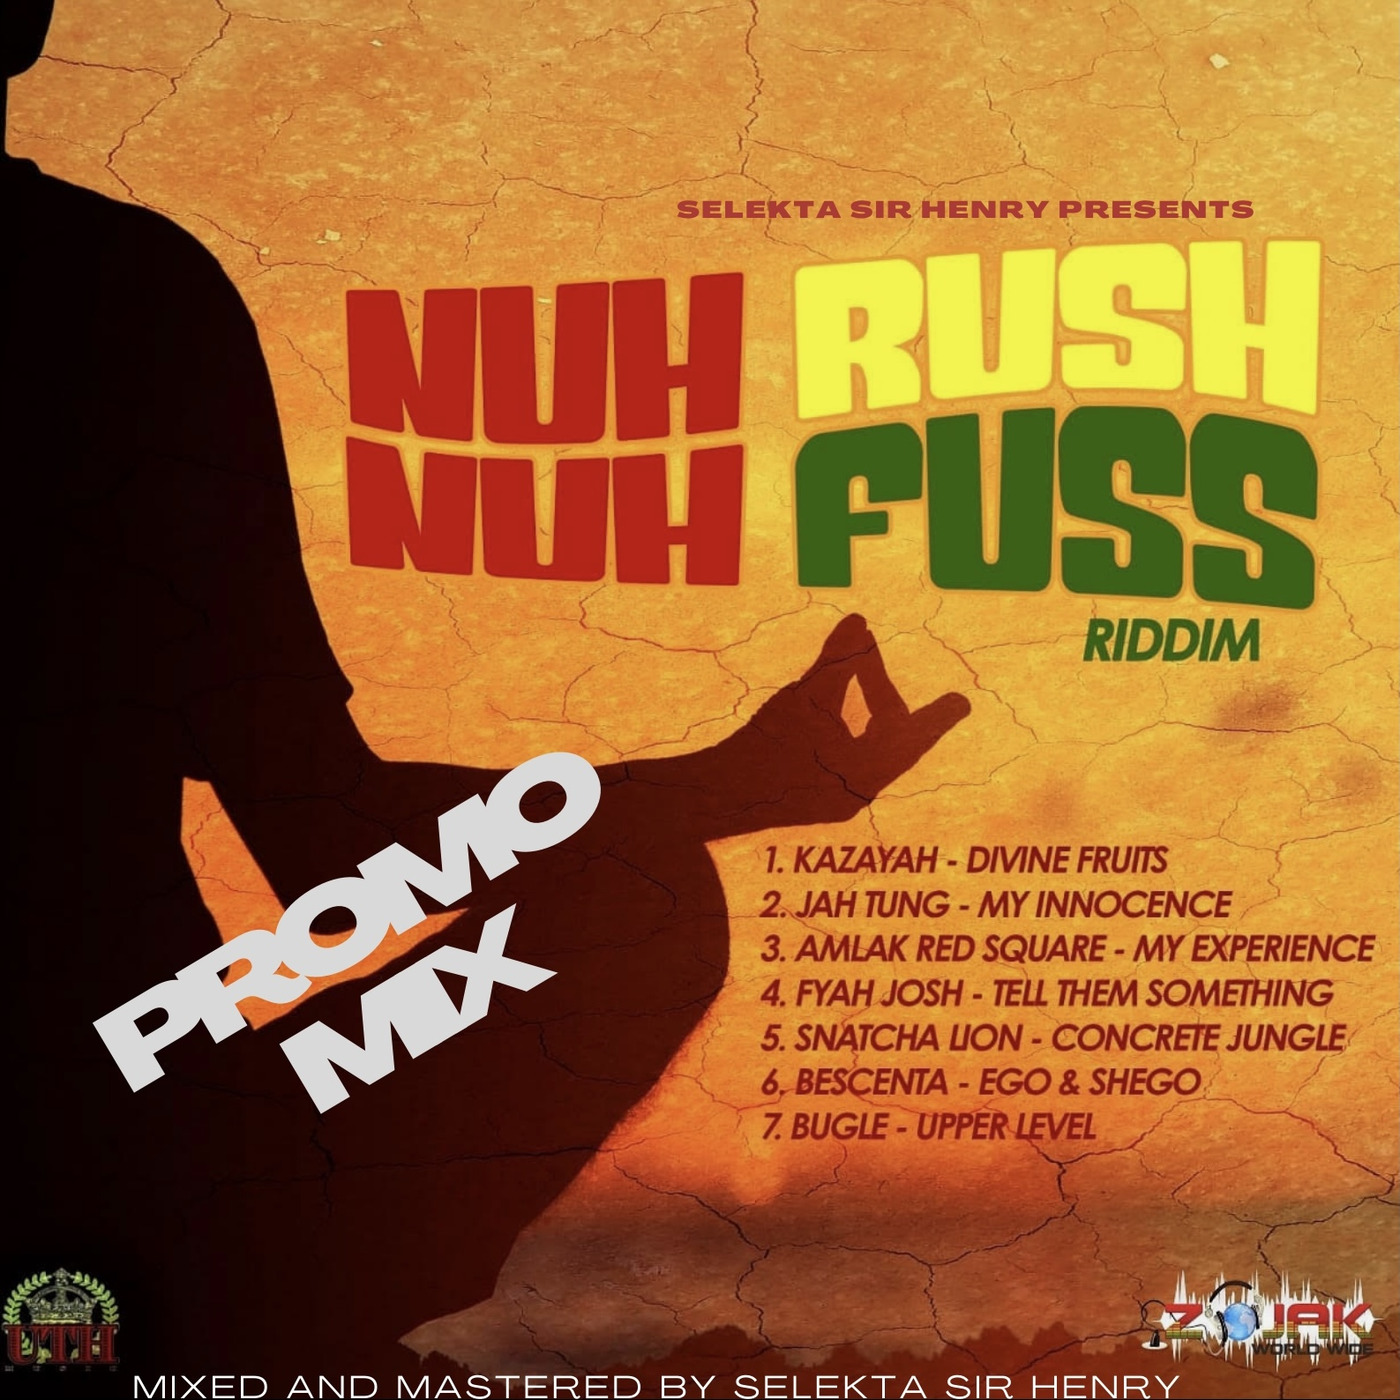 Nuh Rush Nuh Fuss Riddim Promo Mix